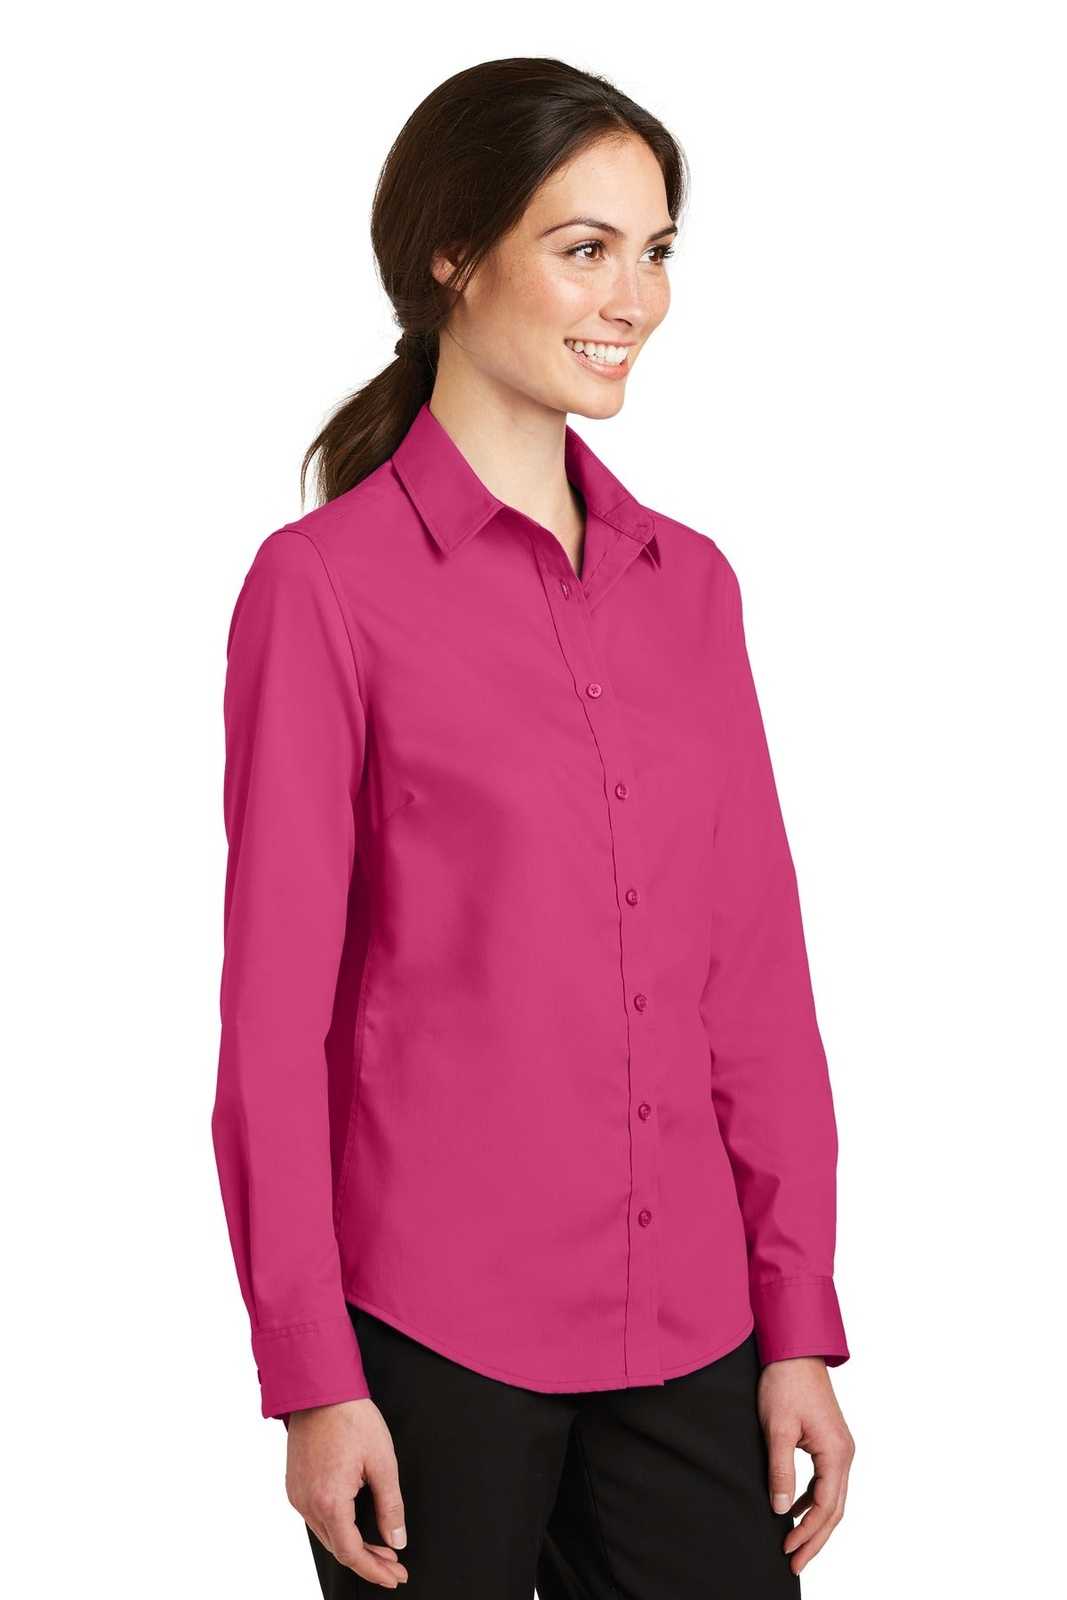 Port Authority L663 Ladies Superpro Twill Shirt - Pink Azalea - HIT a Double - 4